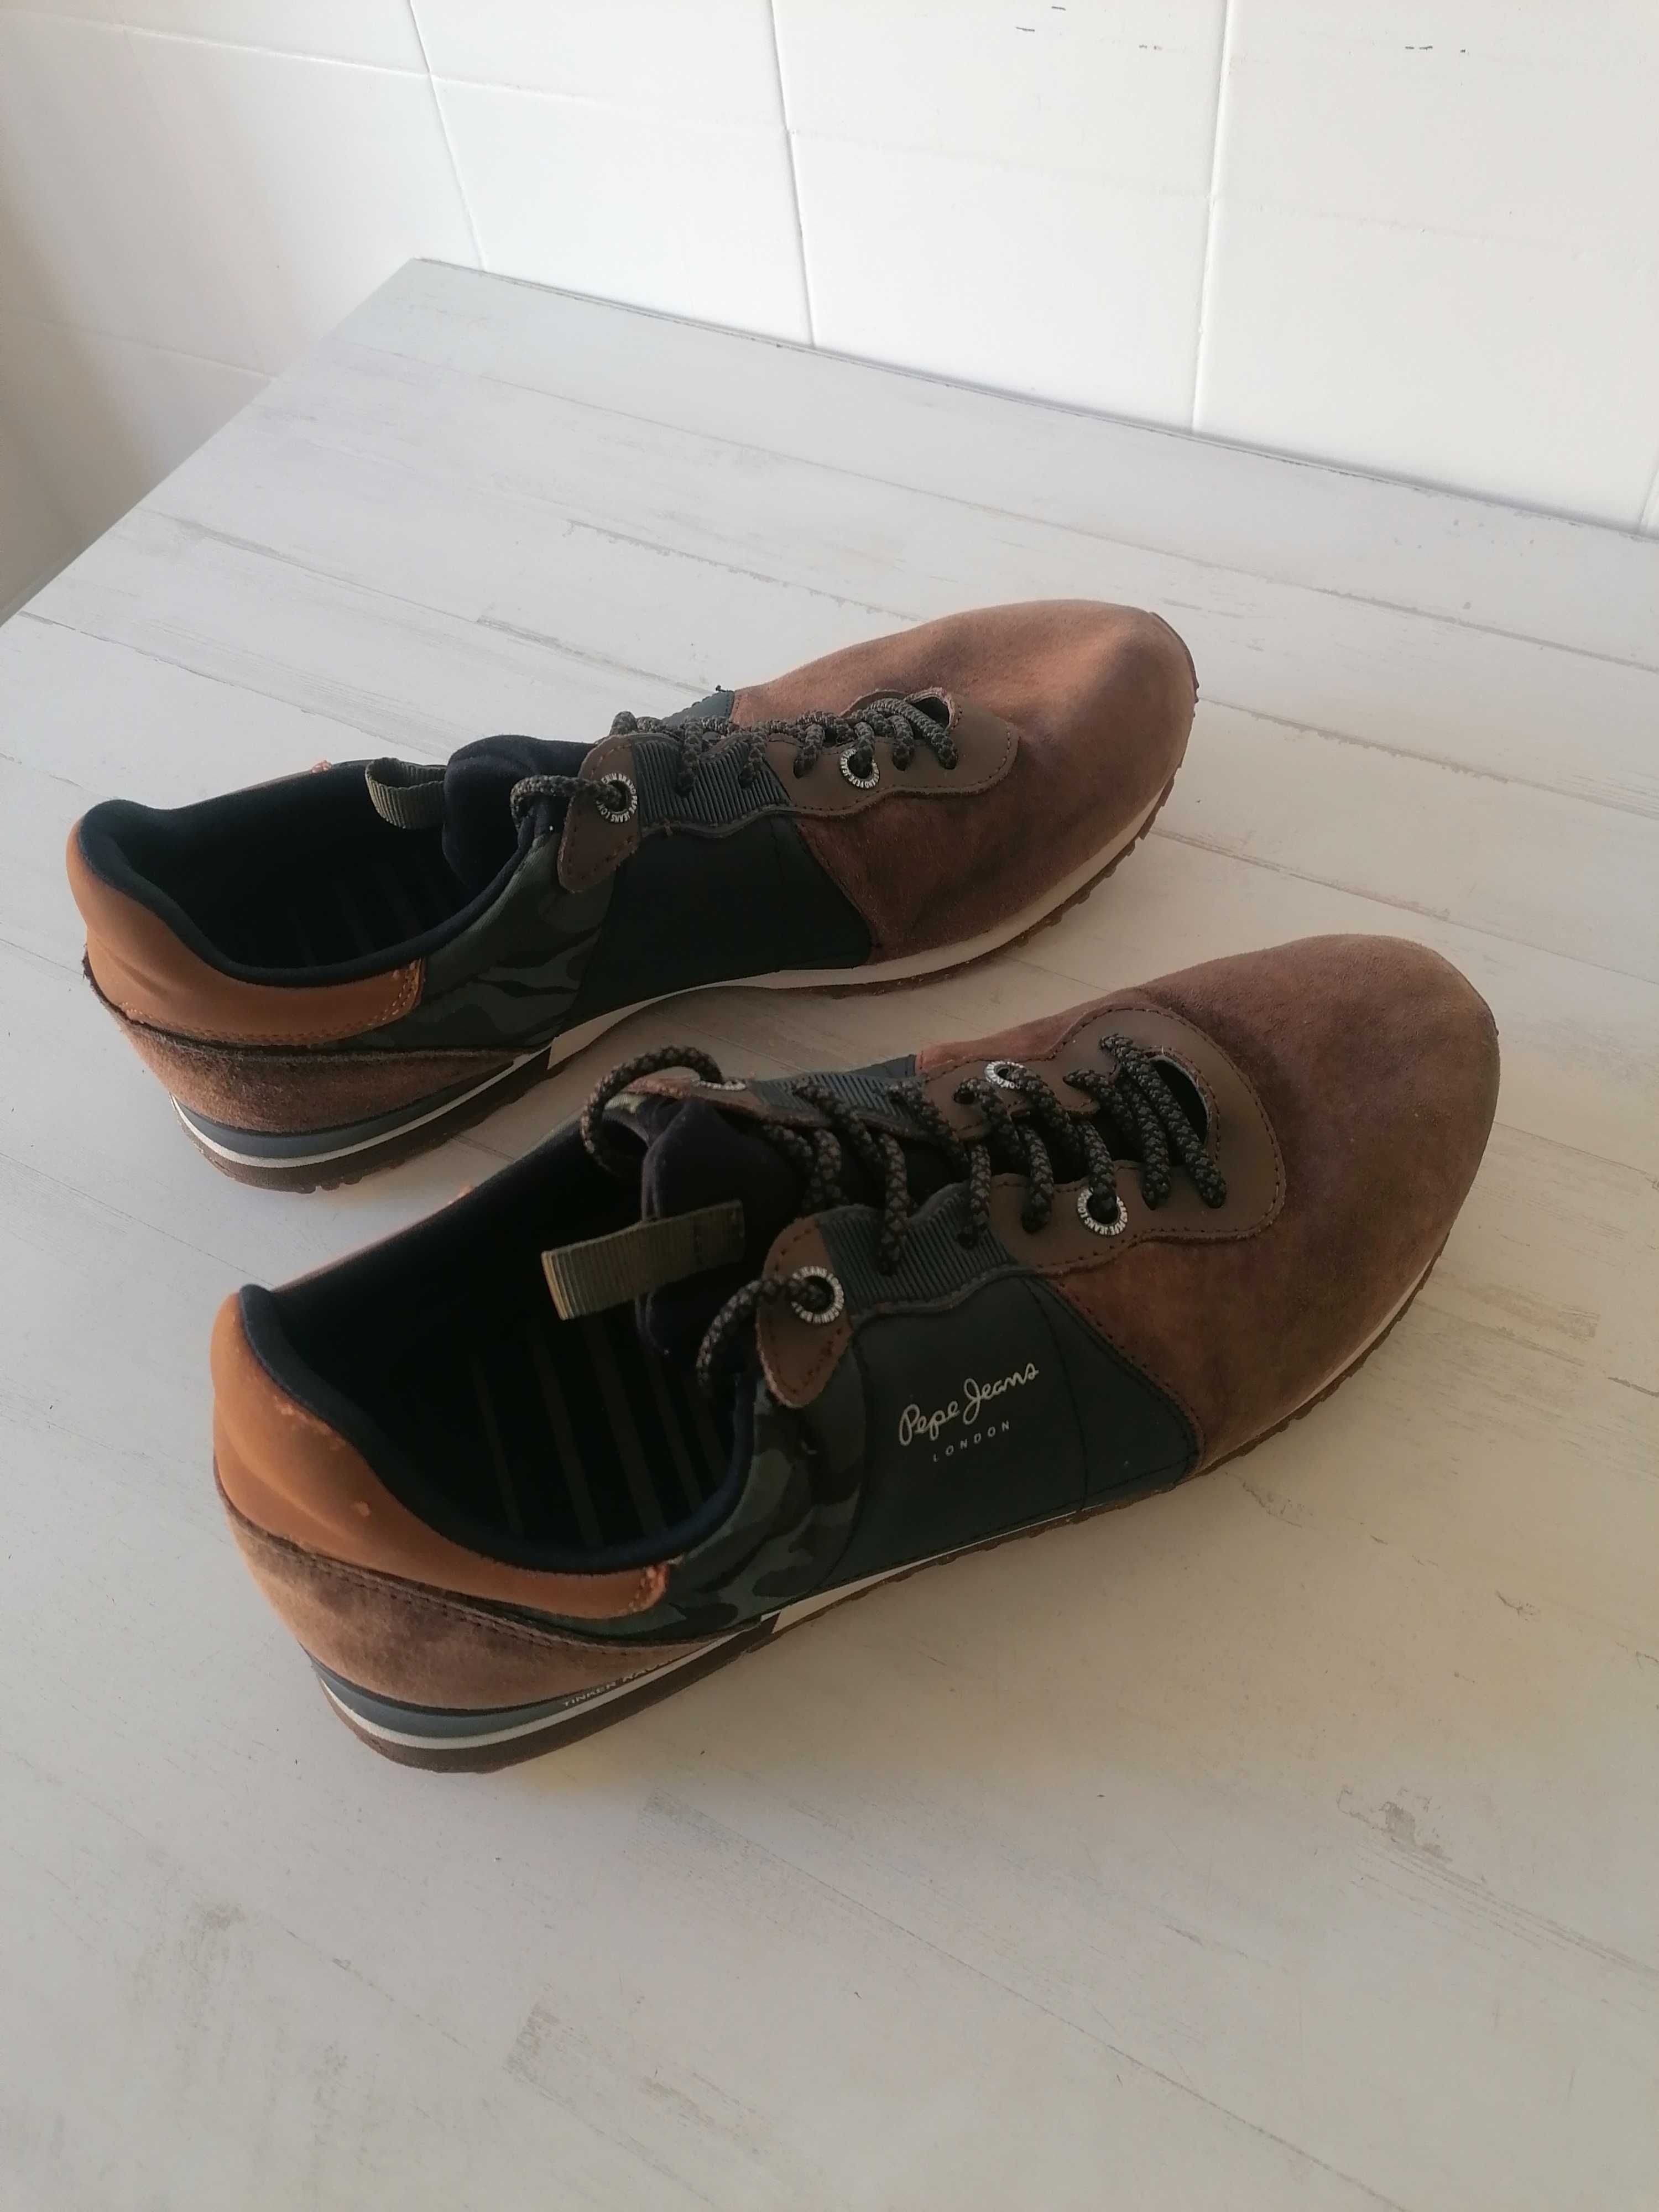 Sapatilhas Ténis Pepe Jeans London - Tamanho 43 - Original Sneakers